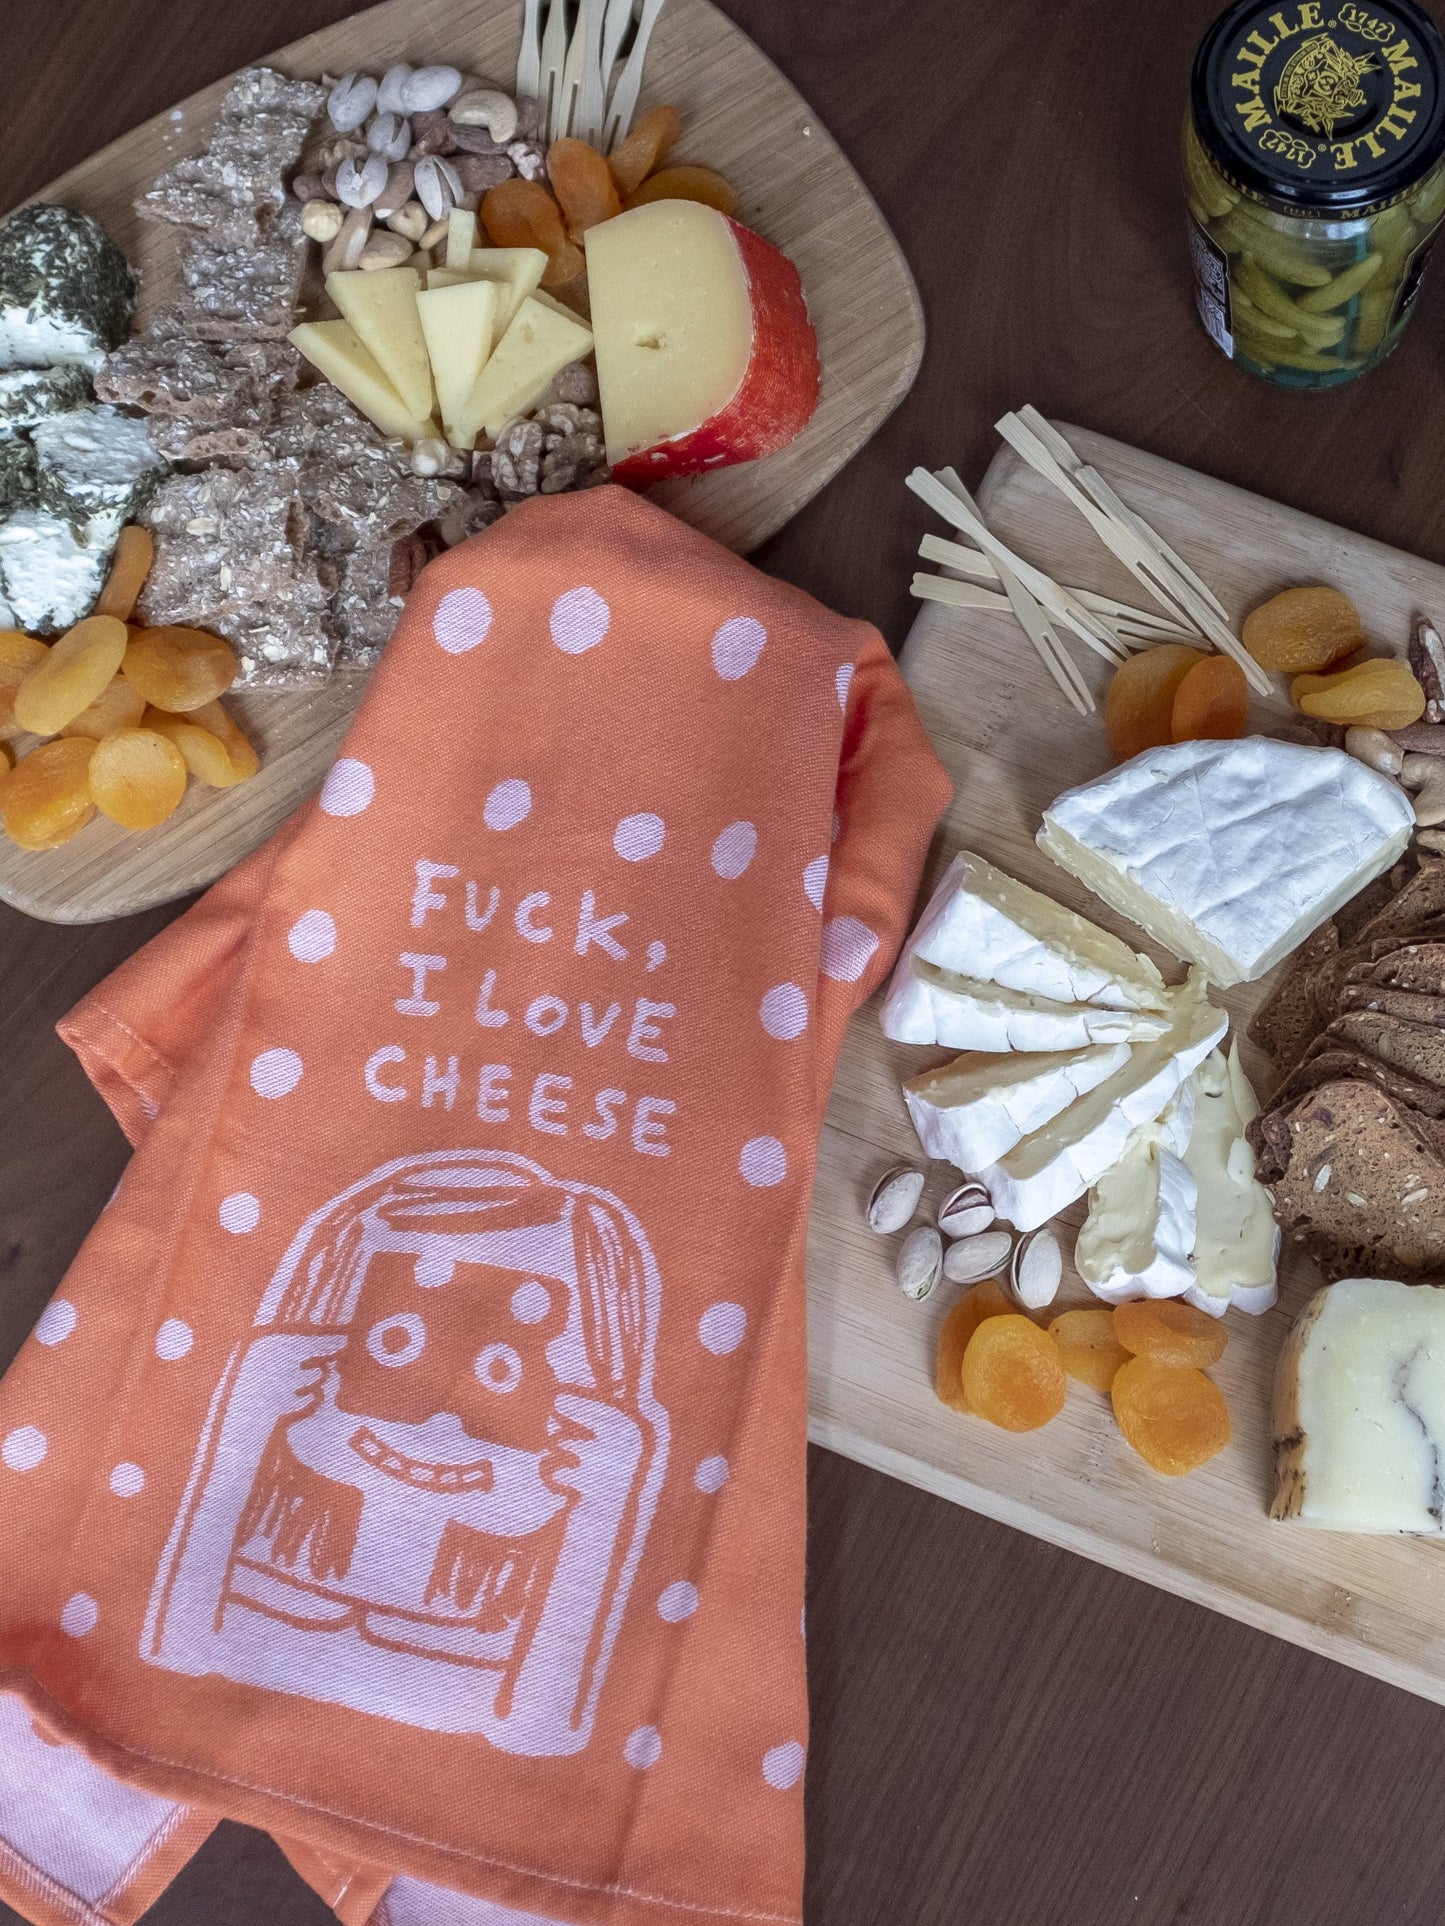 Blue Q - Dish Towel - Fxxk, I Love Cheese